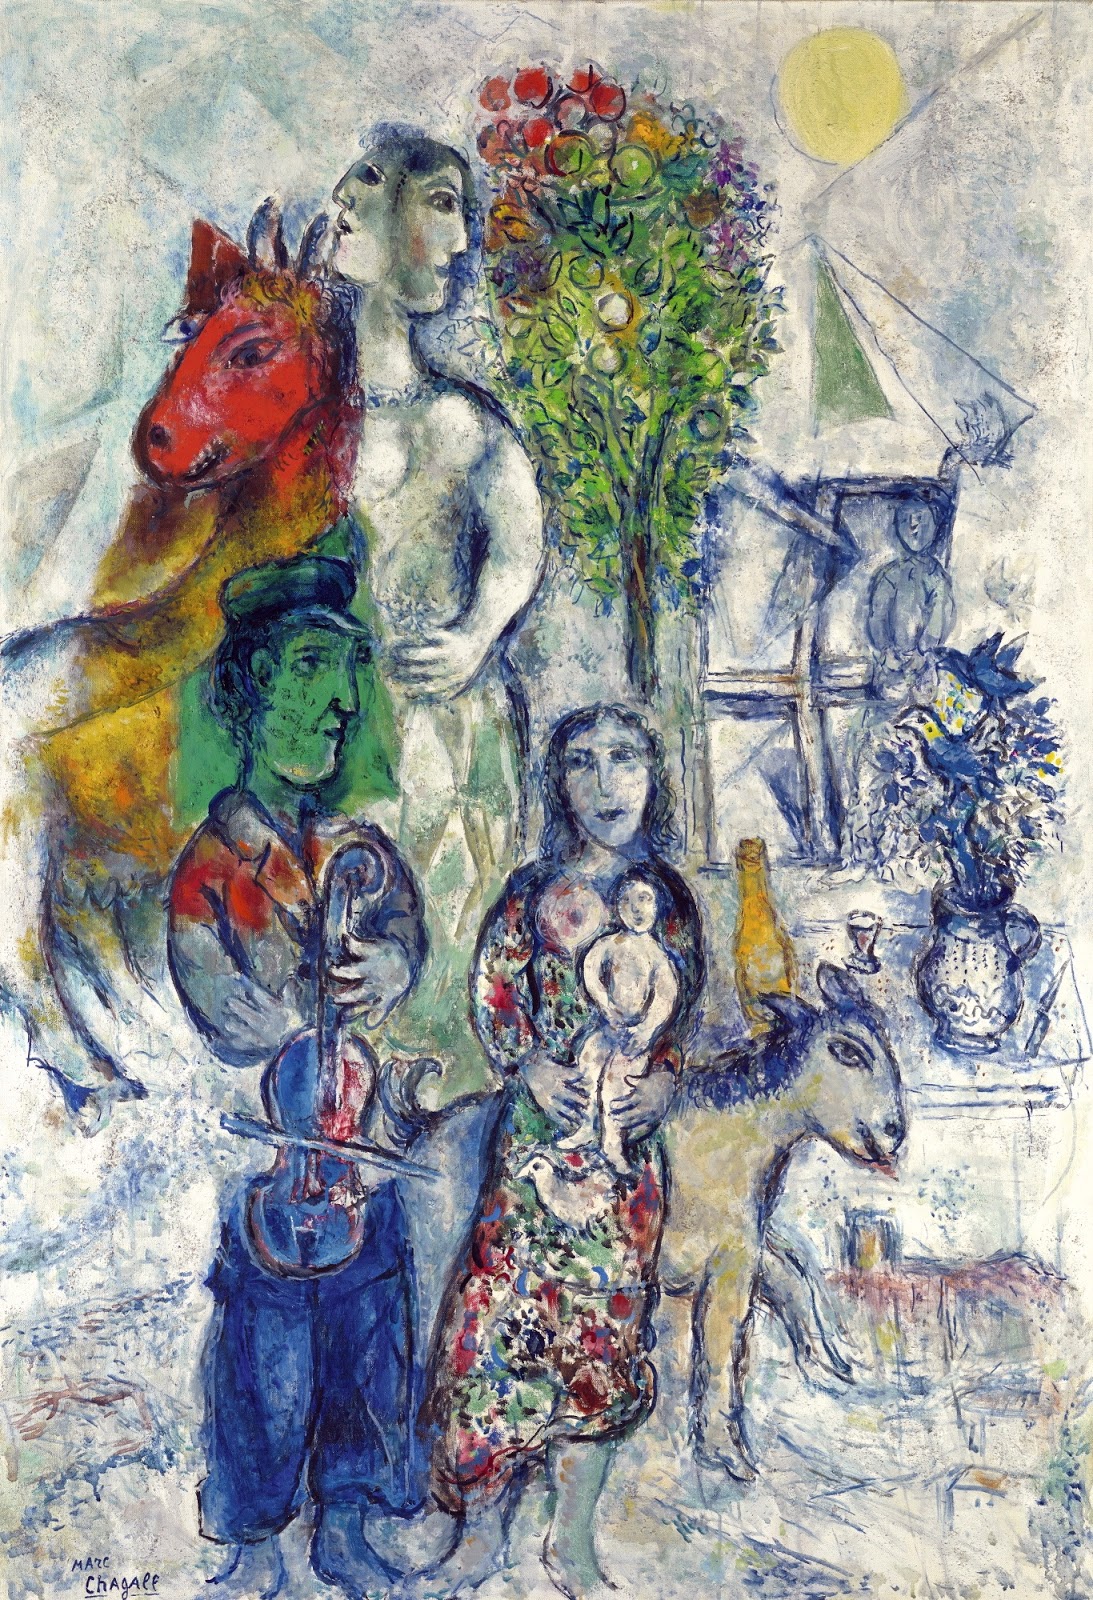 Marc+Chagall-1887-1985 (246).jpg